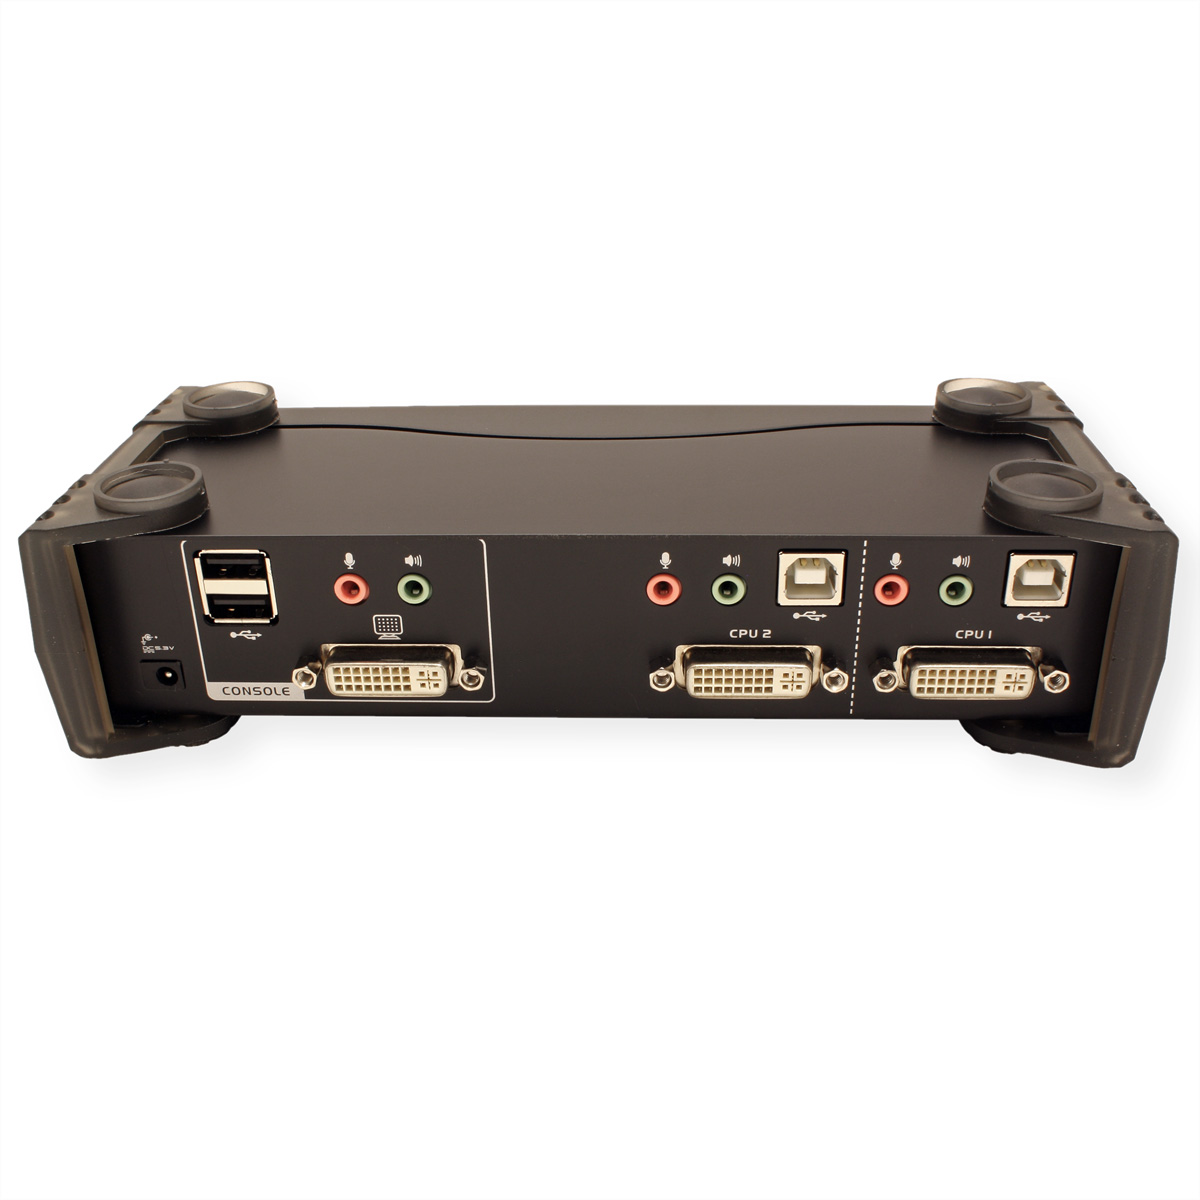 USB-Hub, USB, KVM-Switch, ATEN DVI CS1762A Audio, KVM 2 Ports Switch DVI,